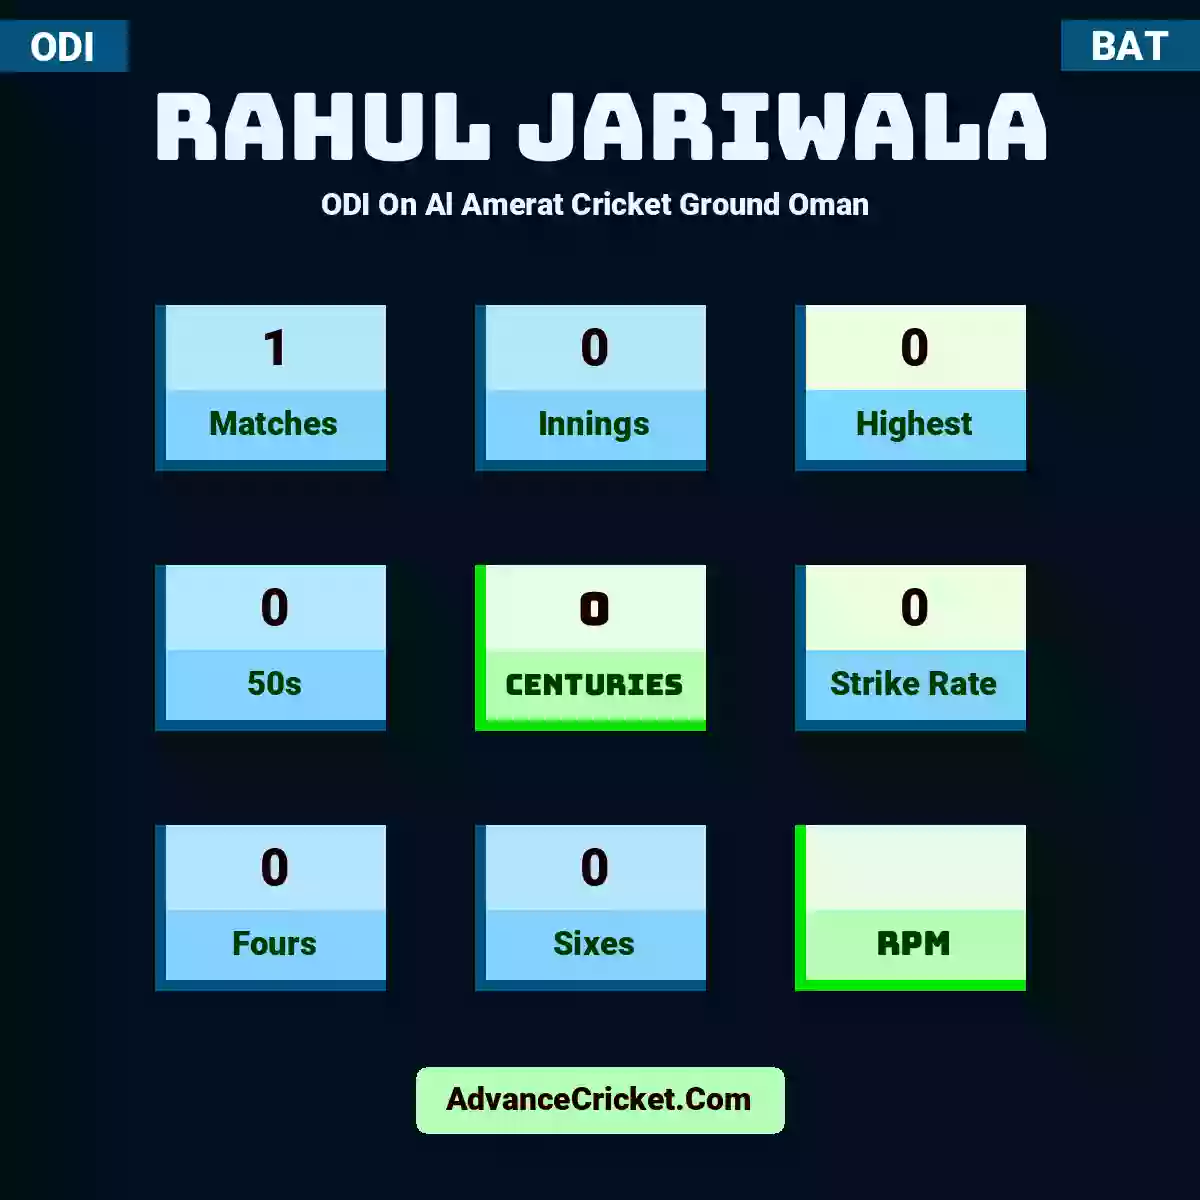 Rahul Jariwala ODI  On Al Amerat Cricket Ground Oman , Rahul Jariwala played 1 matches, scored 0 runs as highest, 0 half-centuries, and 0 centuries, with a strike rate of 0. R.Jariwala hit 0 fours and 0 sixes.